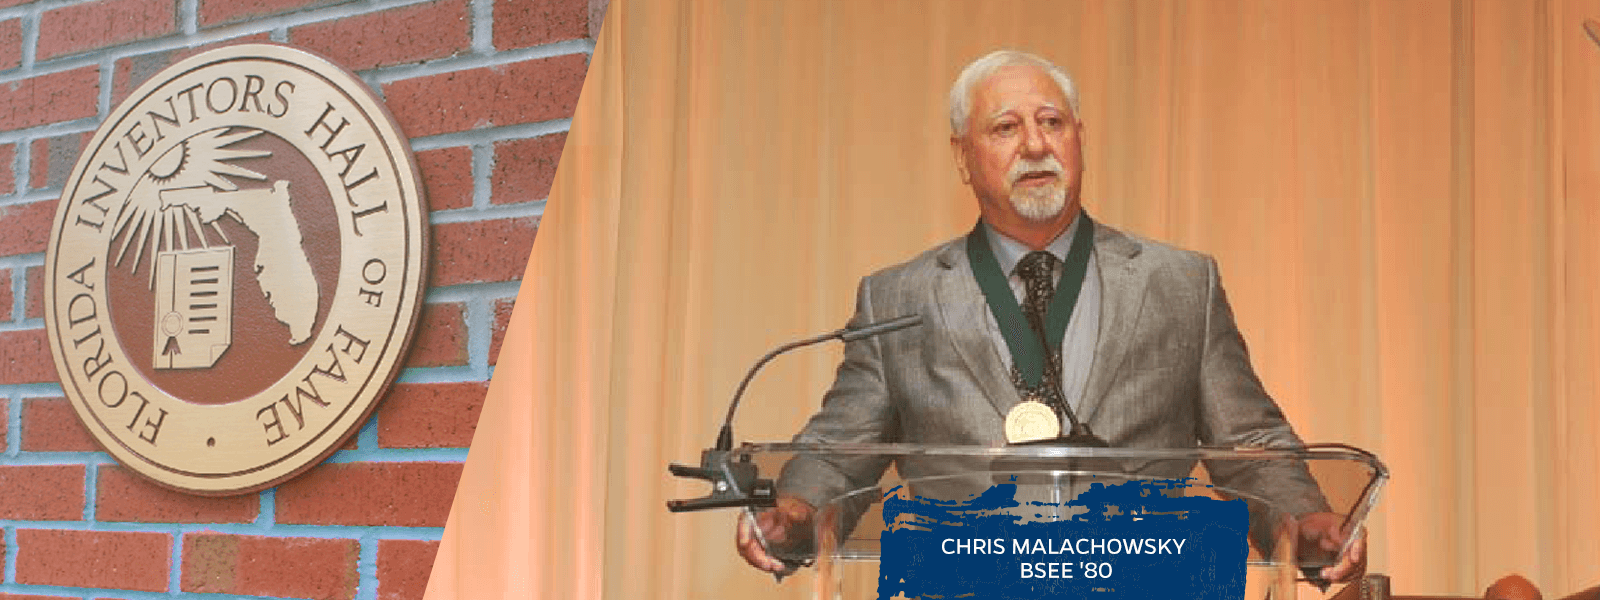 Chris Malachowsky, Florida Inventors Hall of Fame